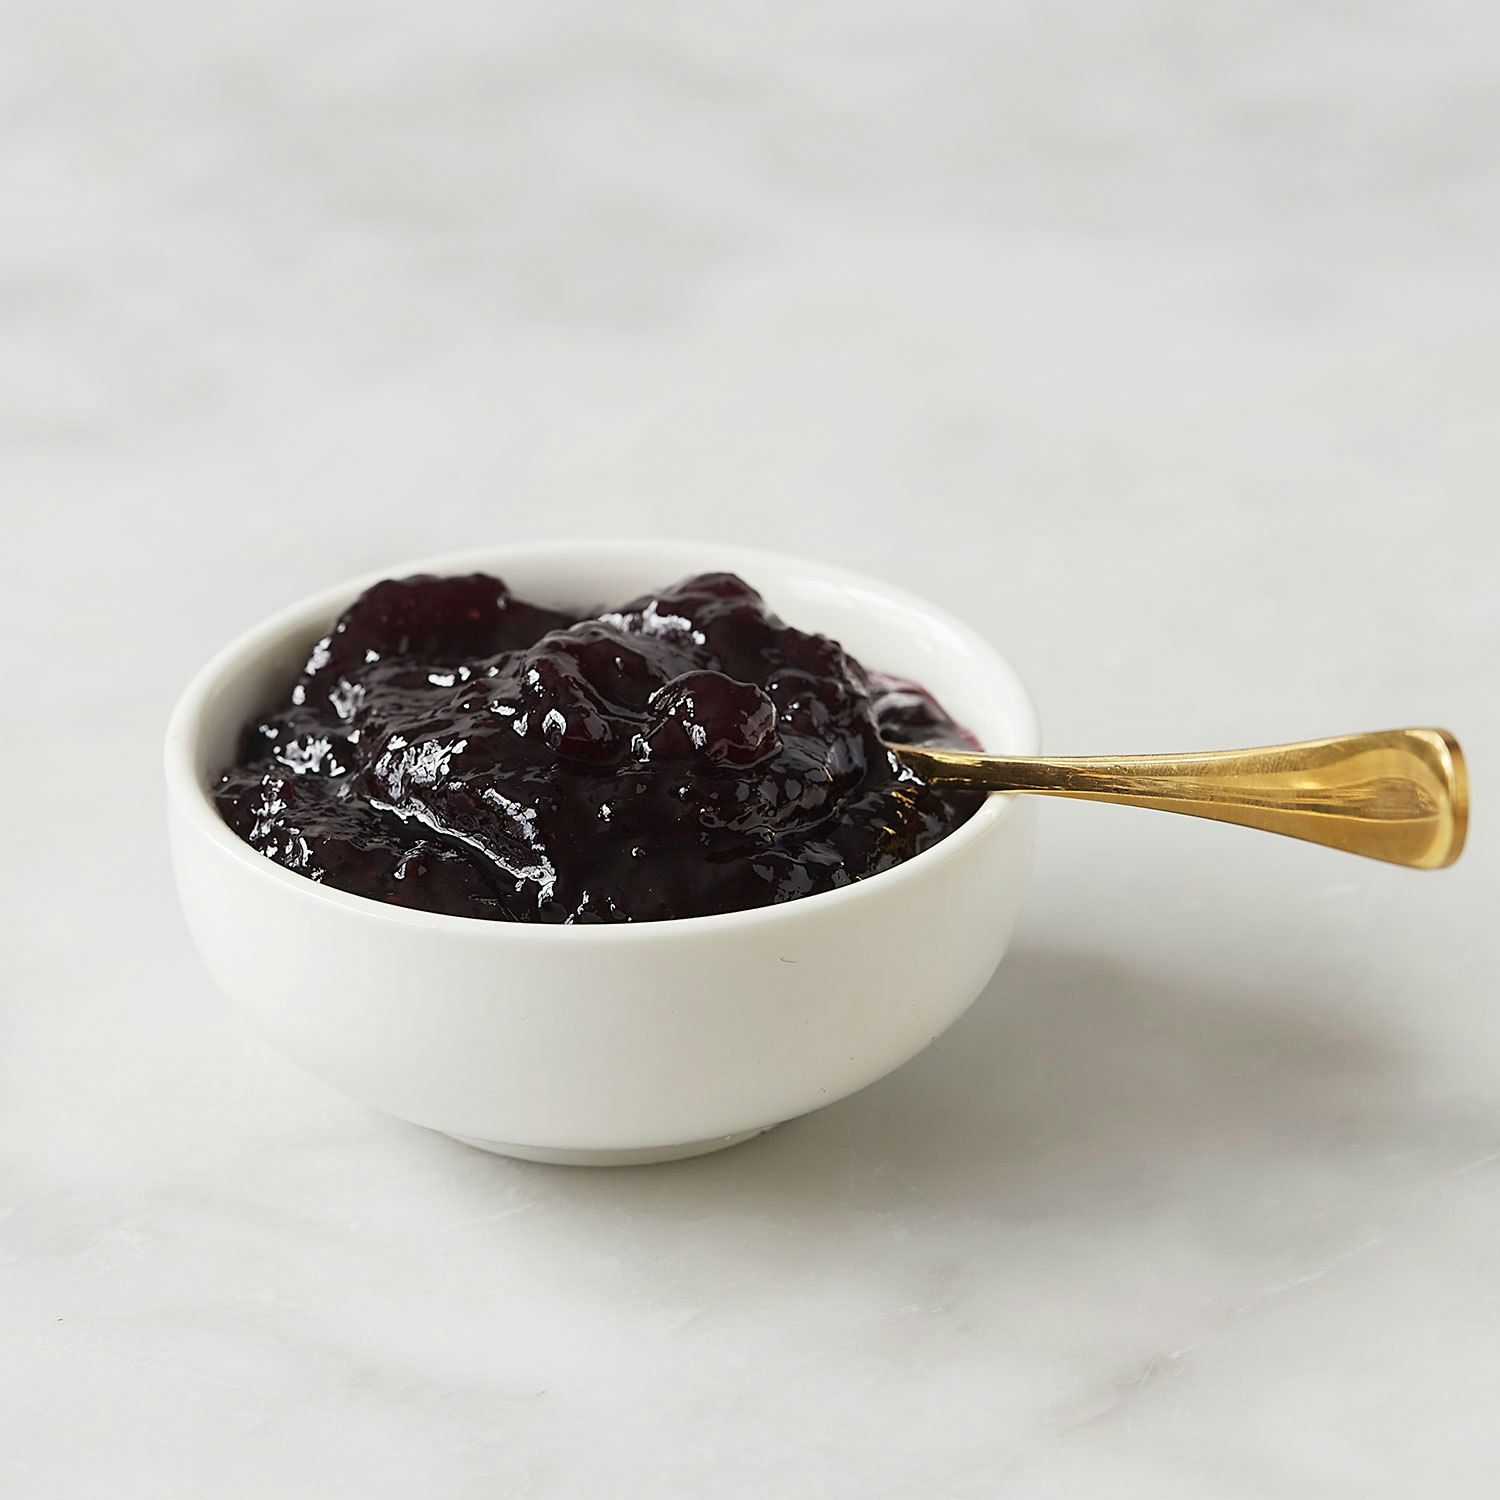 murrays wild blueberries preserves specialty foods